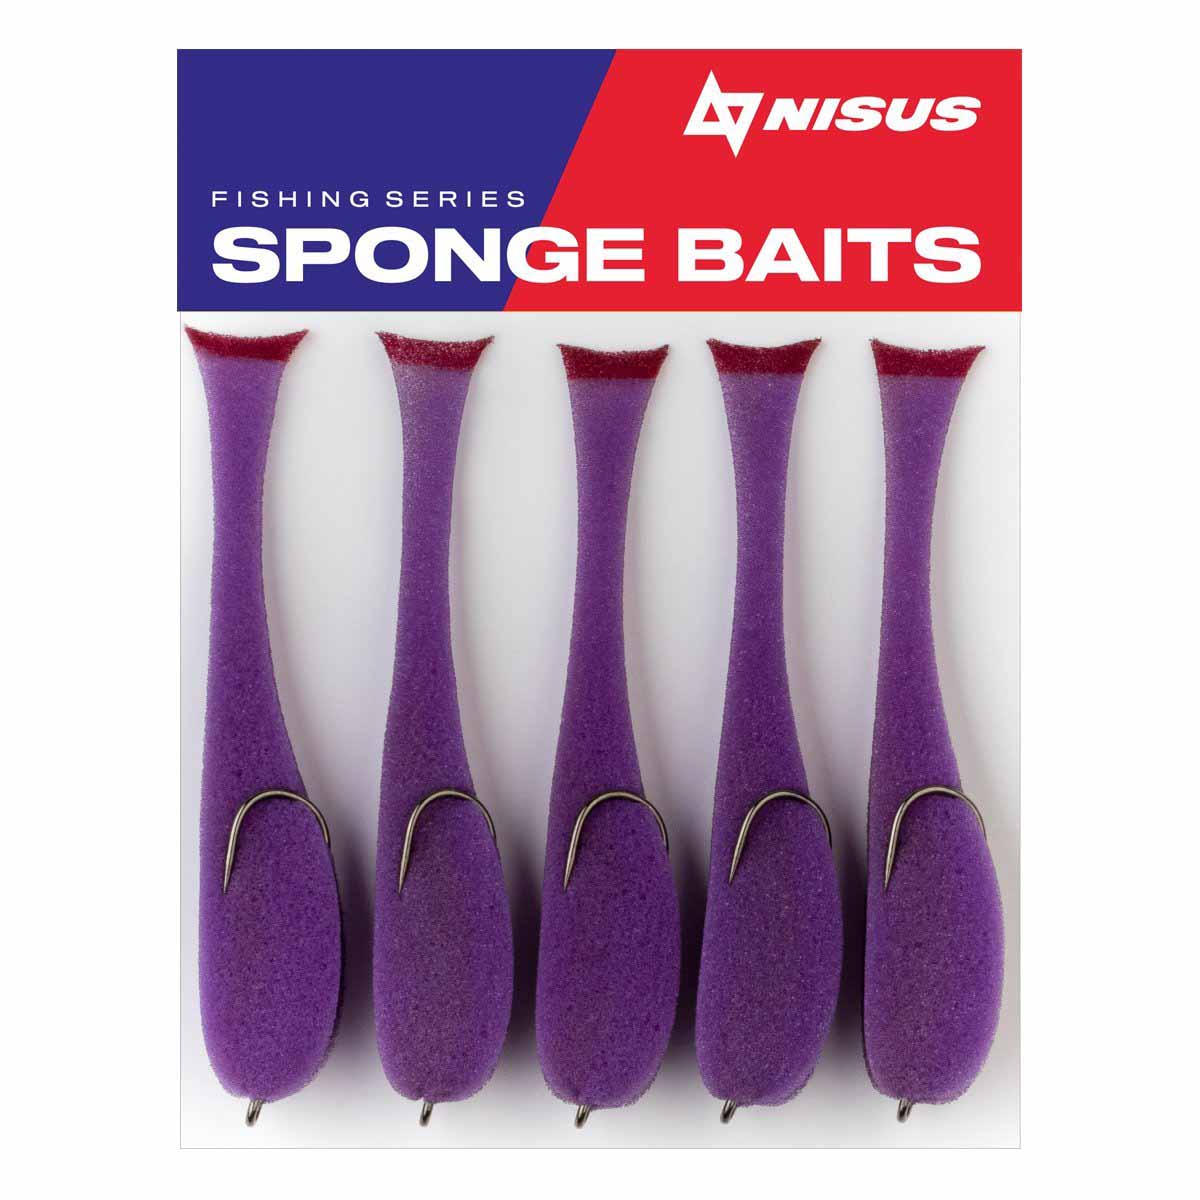 Nisus 4.5 inch Sponge Bait Fishing Lure, pack of 5